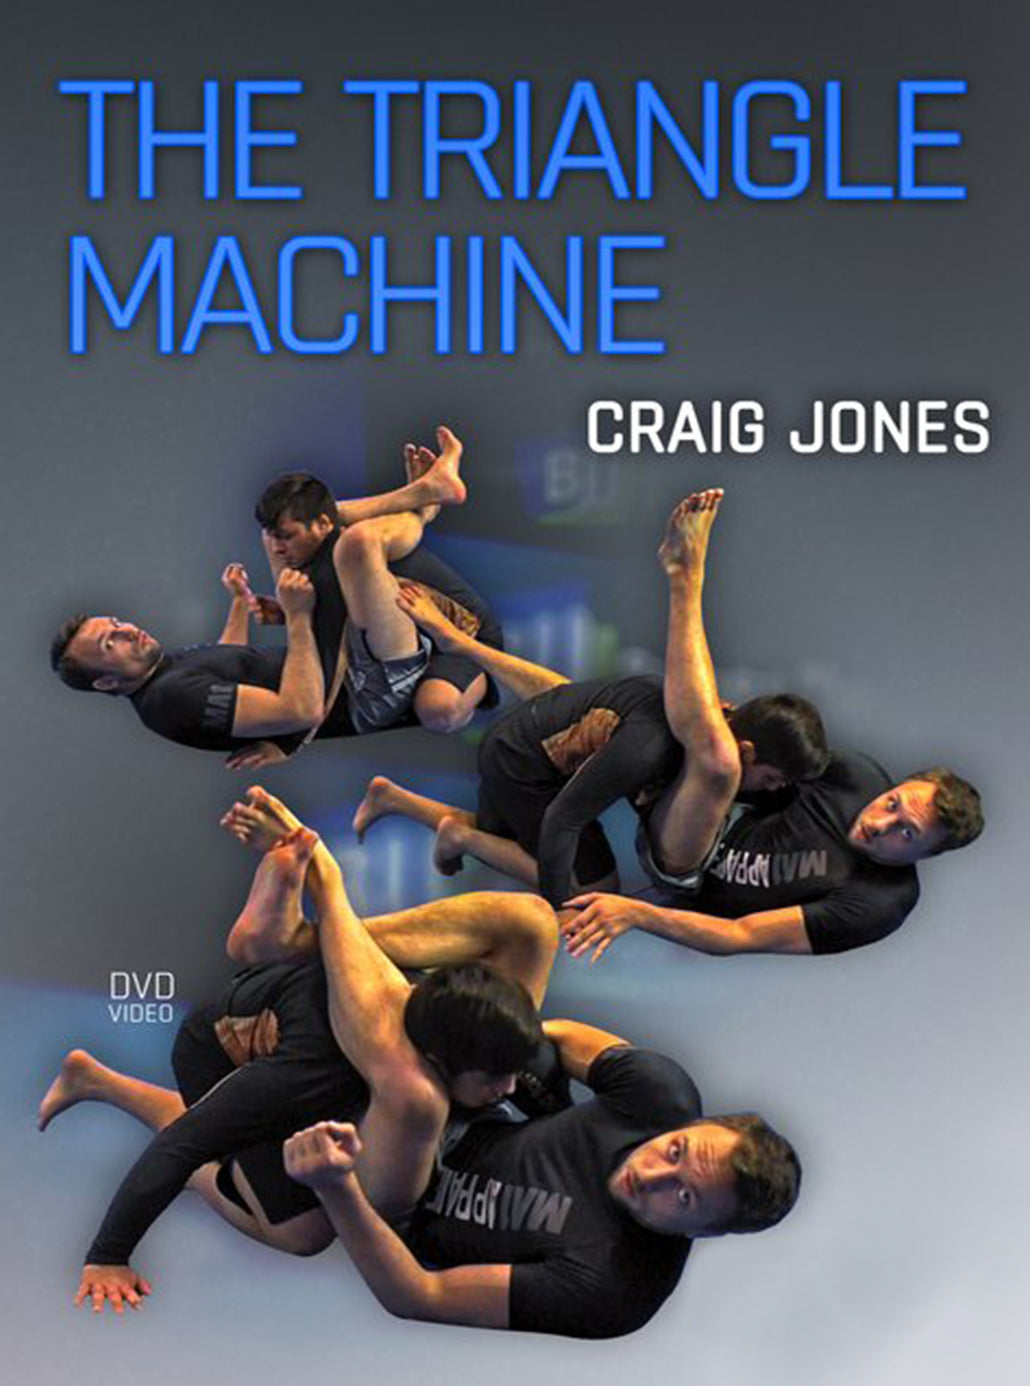 The Triangle Machine by Craig Jones